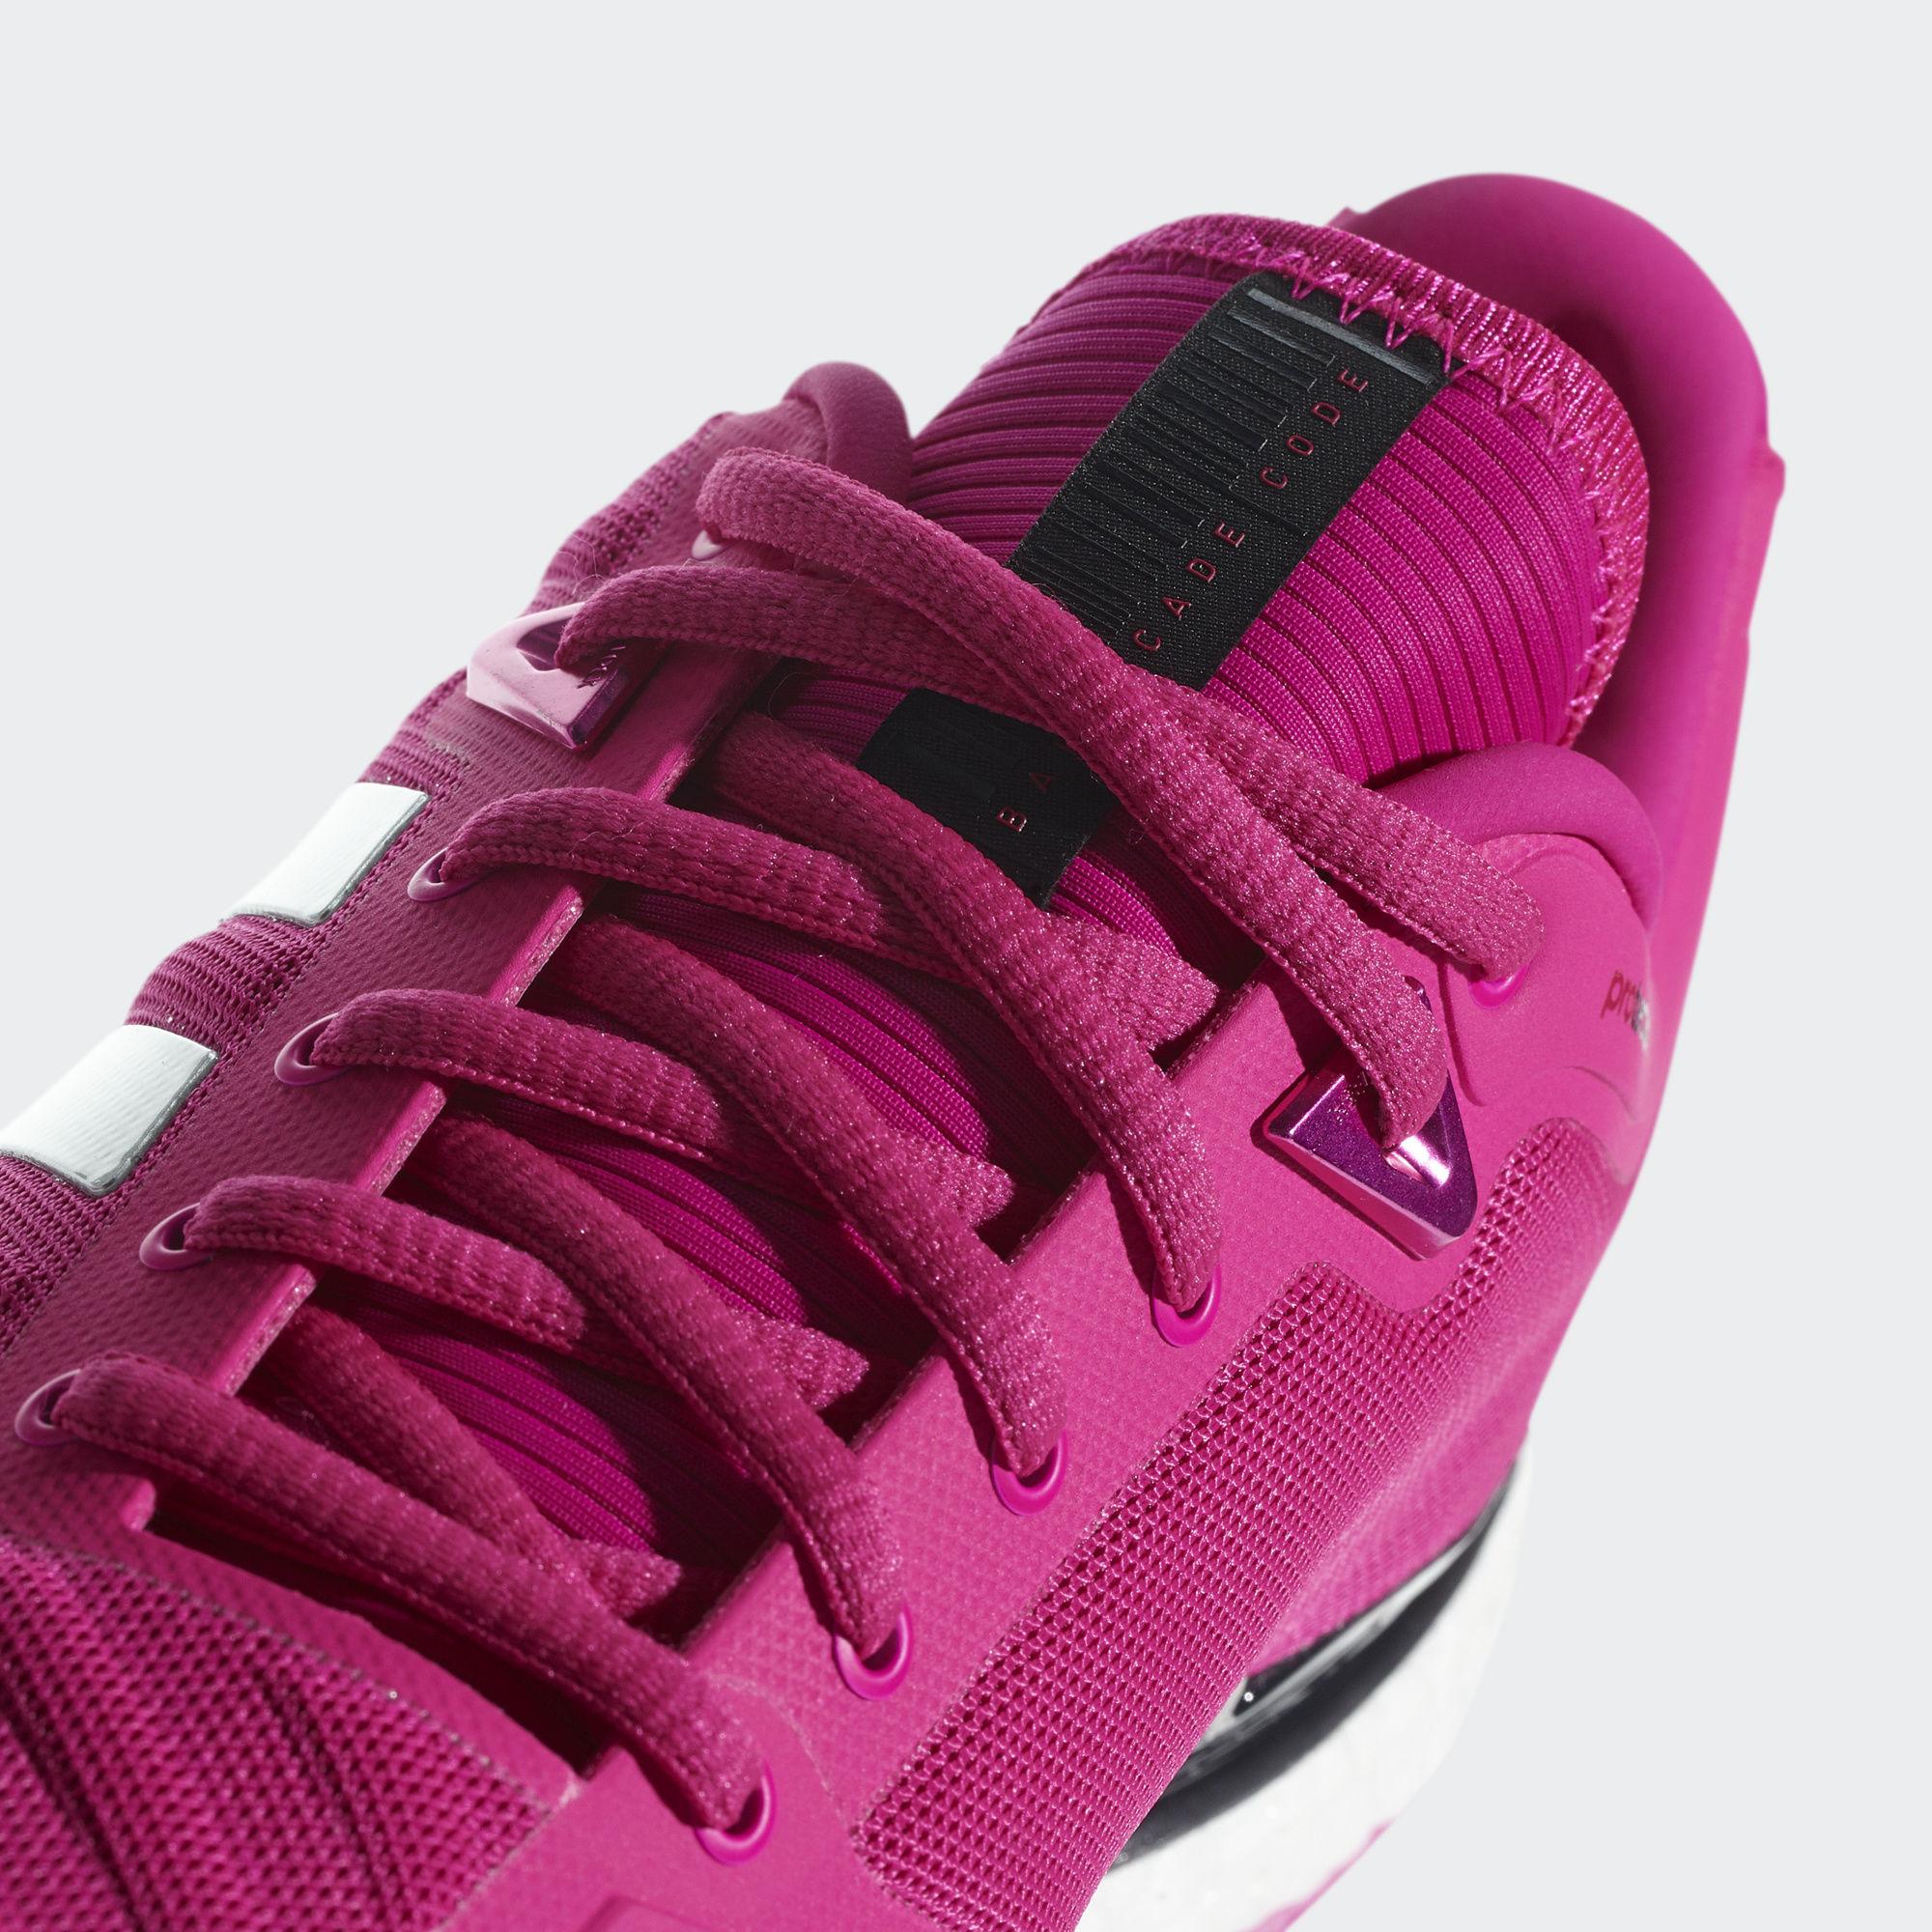 Adidas Mens Barricade Boost 2018 Tennis Shoes - Shock Pink ...